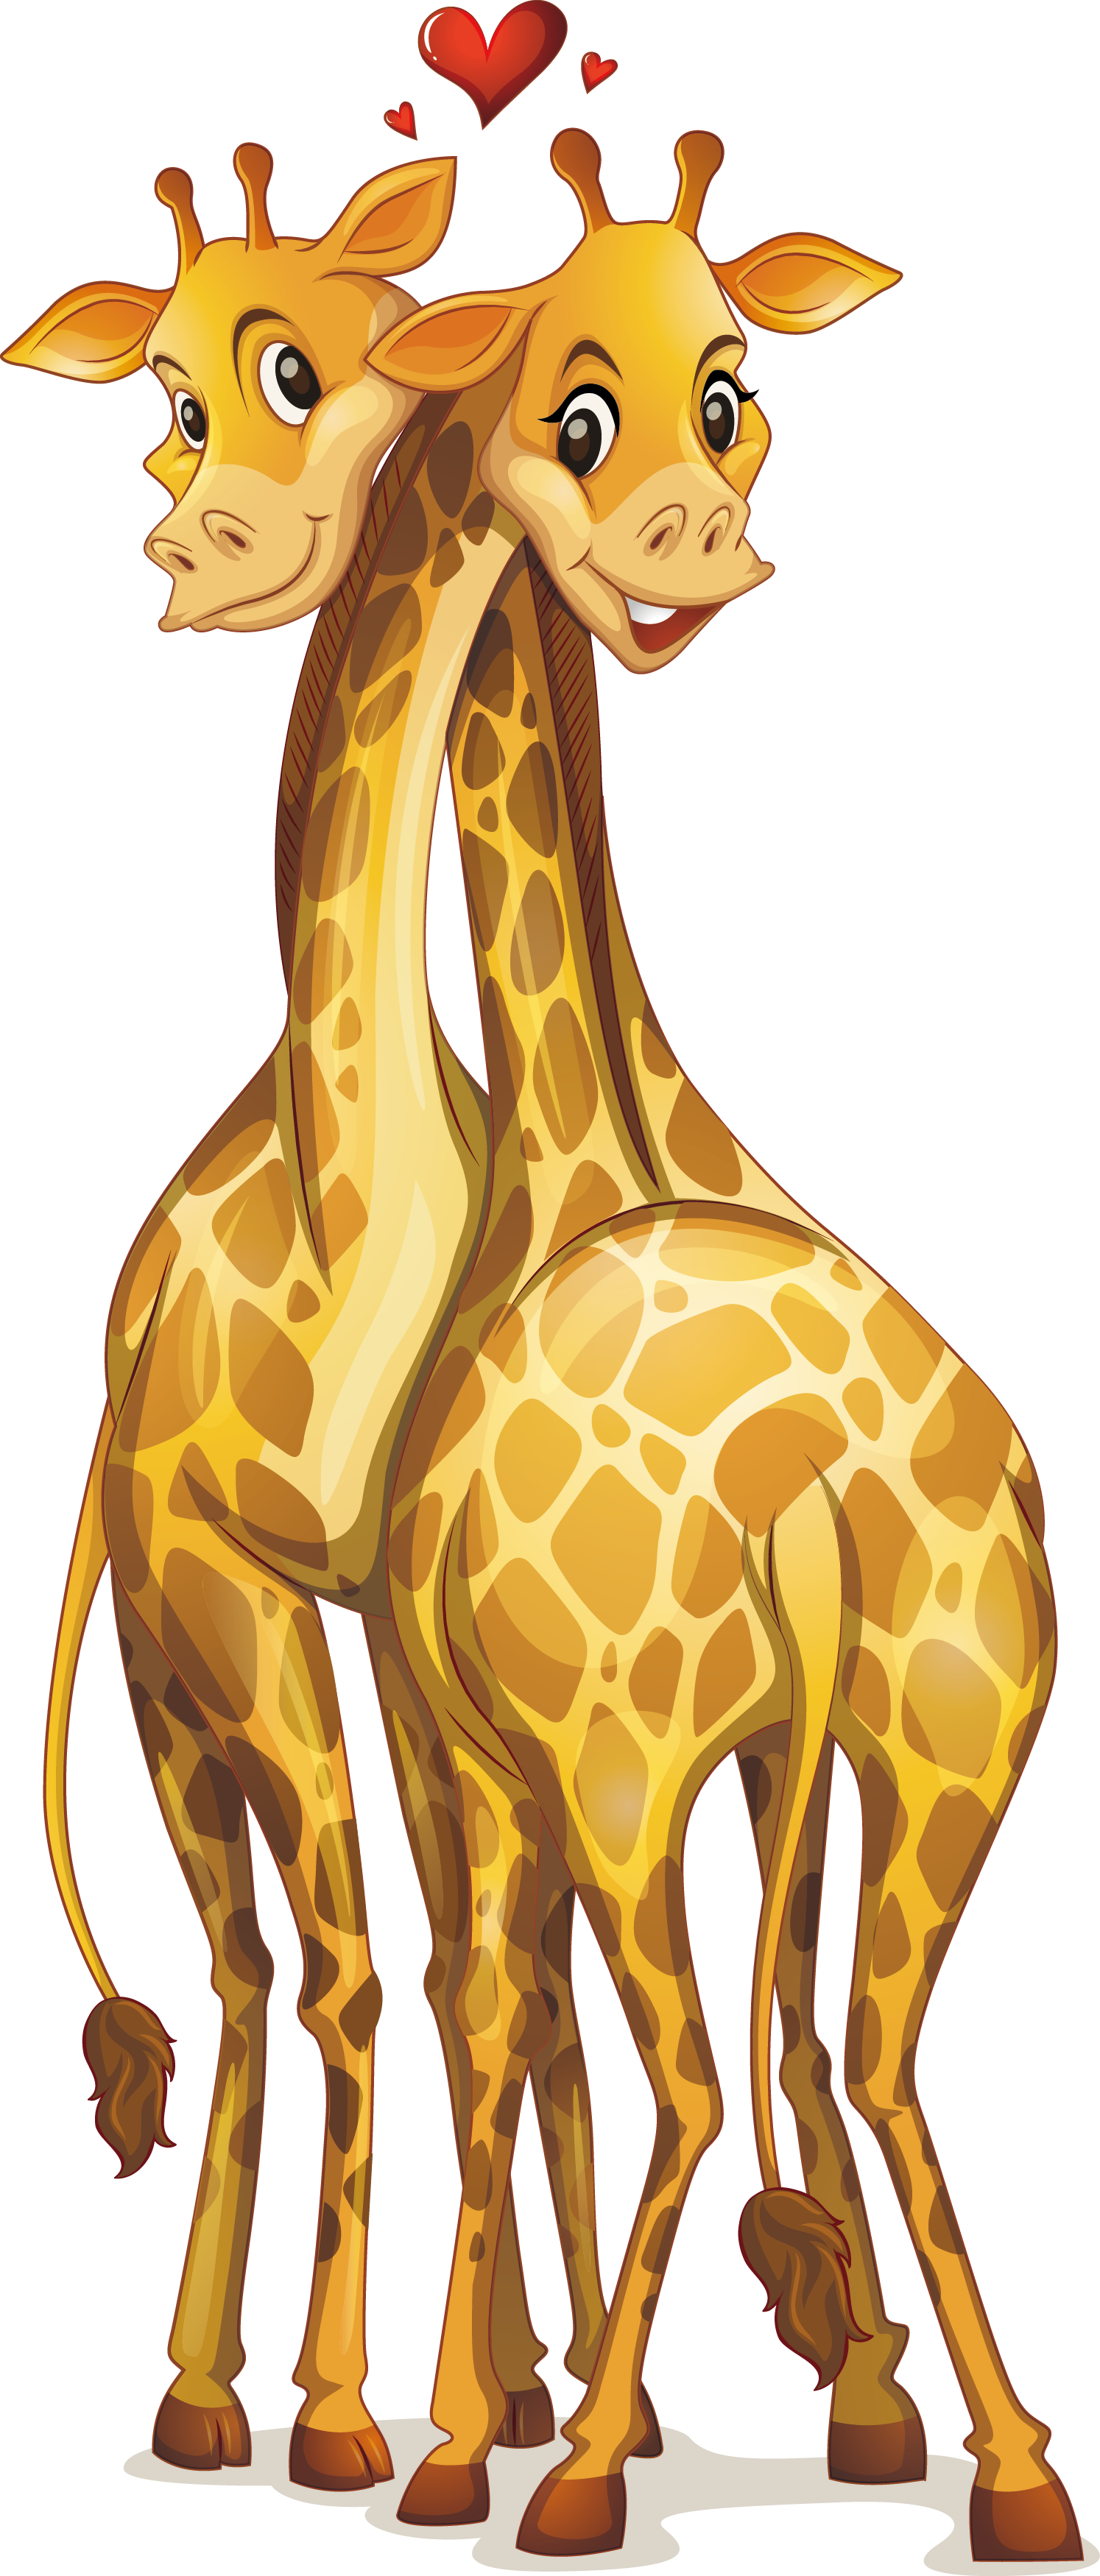 Giraffe Cartoon Royalty-free Illustration - Giraffe Cartoon Royalty-free Illustration (1494x3499)